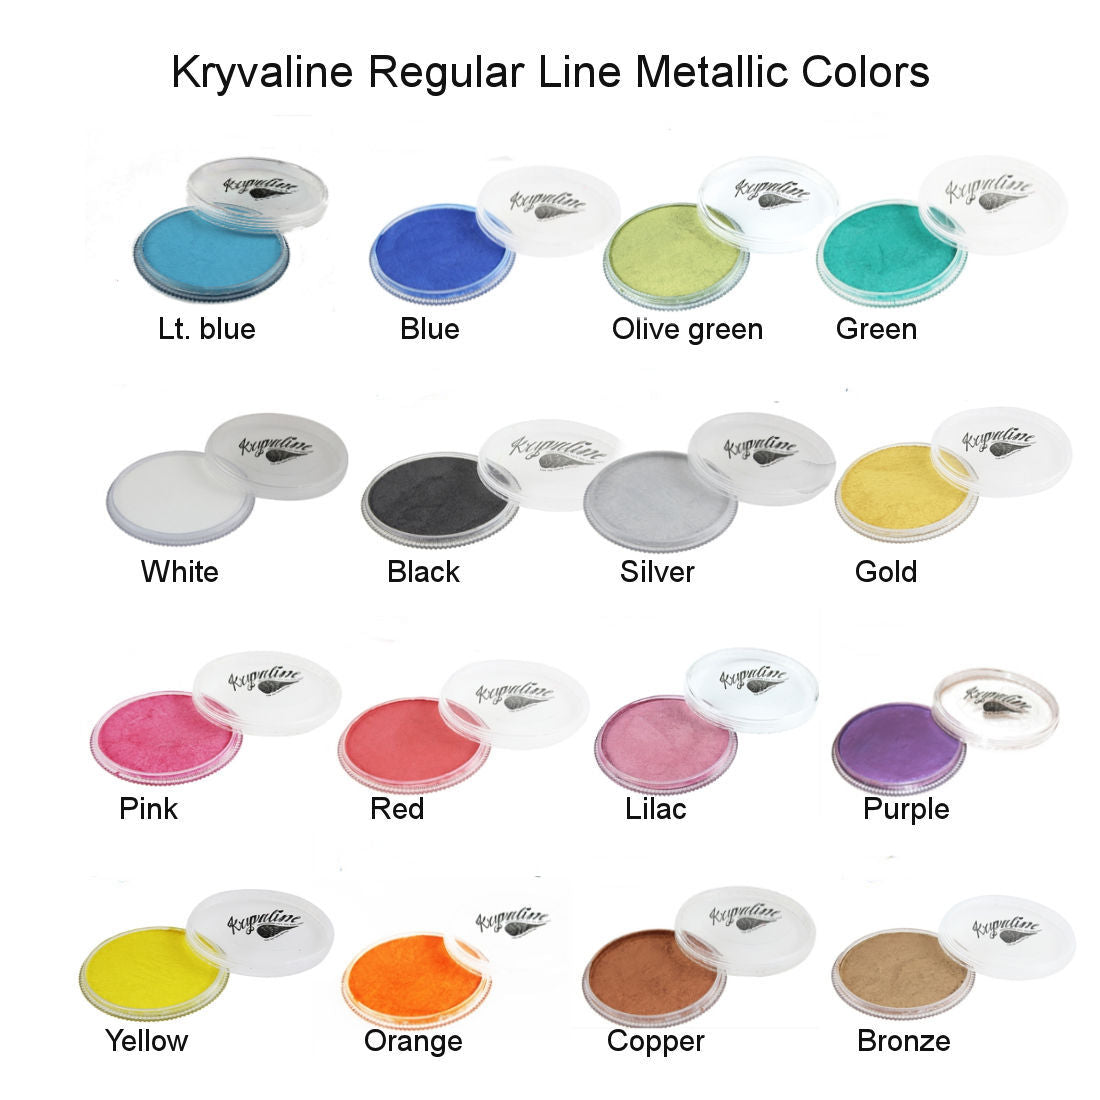 Kryvaline Face and body Paint Metallic Colors 30g Silver - Kryvaline Body Art Makeup | Glitter Tattoos, Face & Body Paint, Design - Kryvaline Body Art Makeup